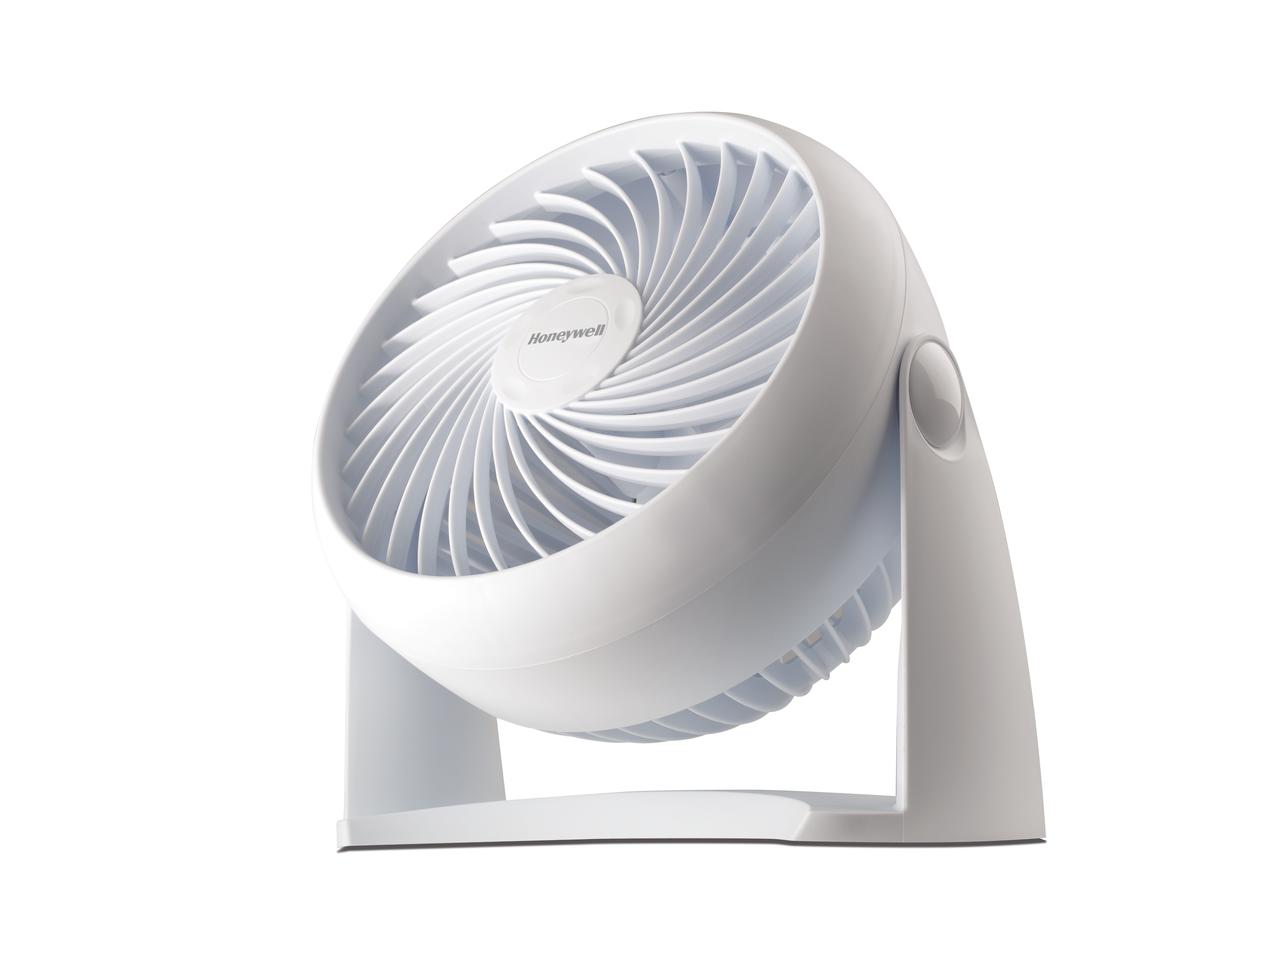 Honeywell Table Air Circulator Fan, HT-904, White - image 1 of 11